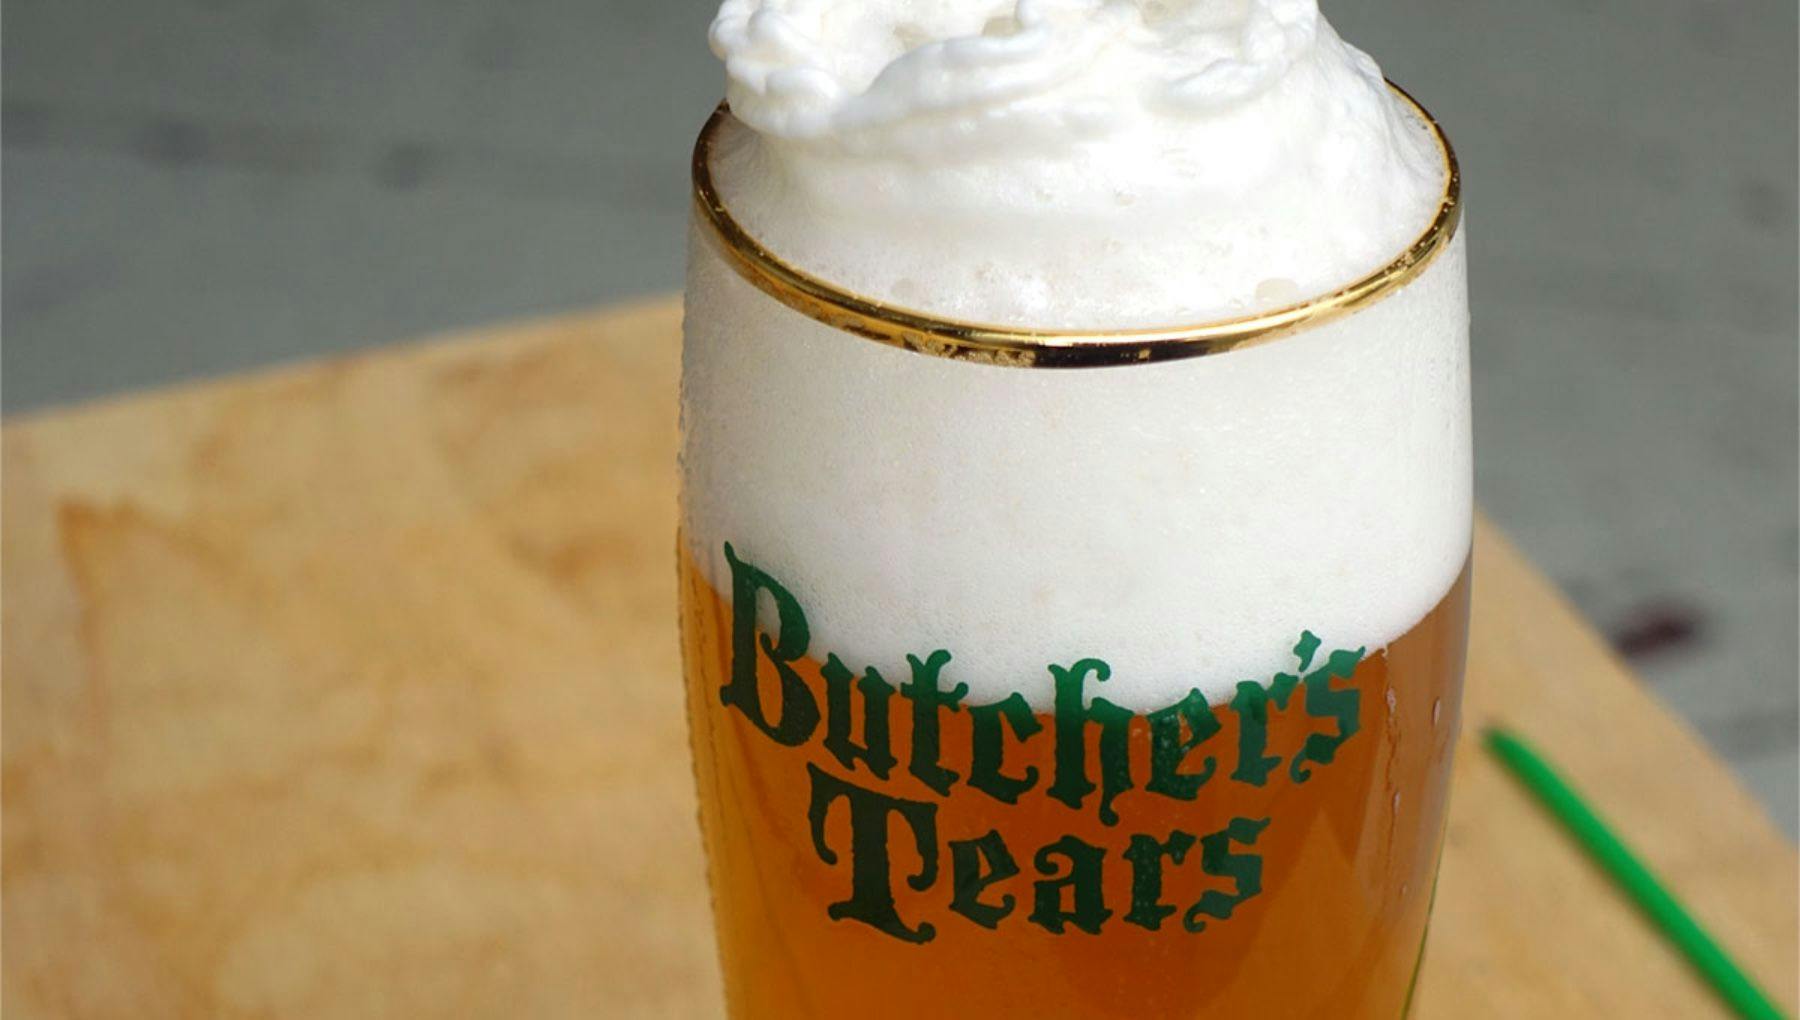 Butcher's Tears beer glass